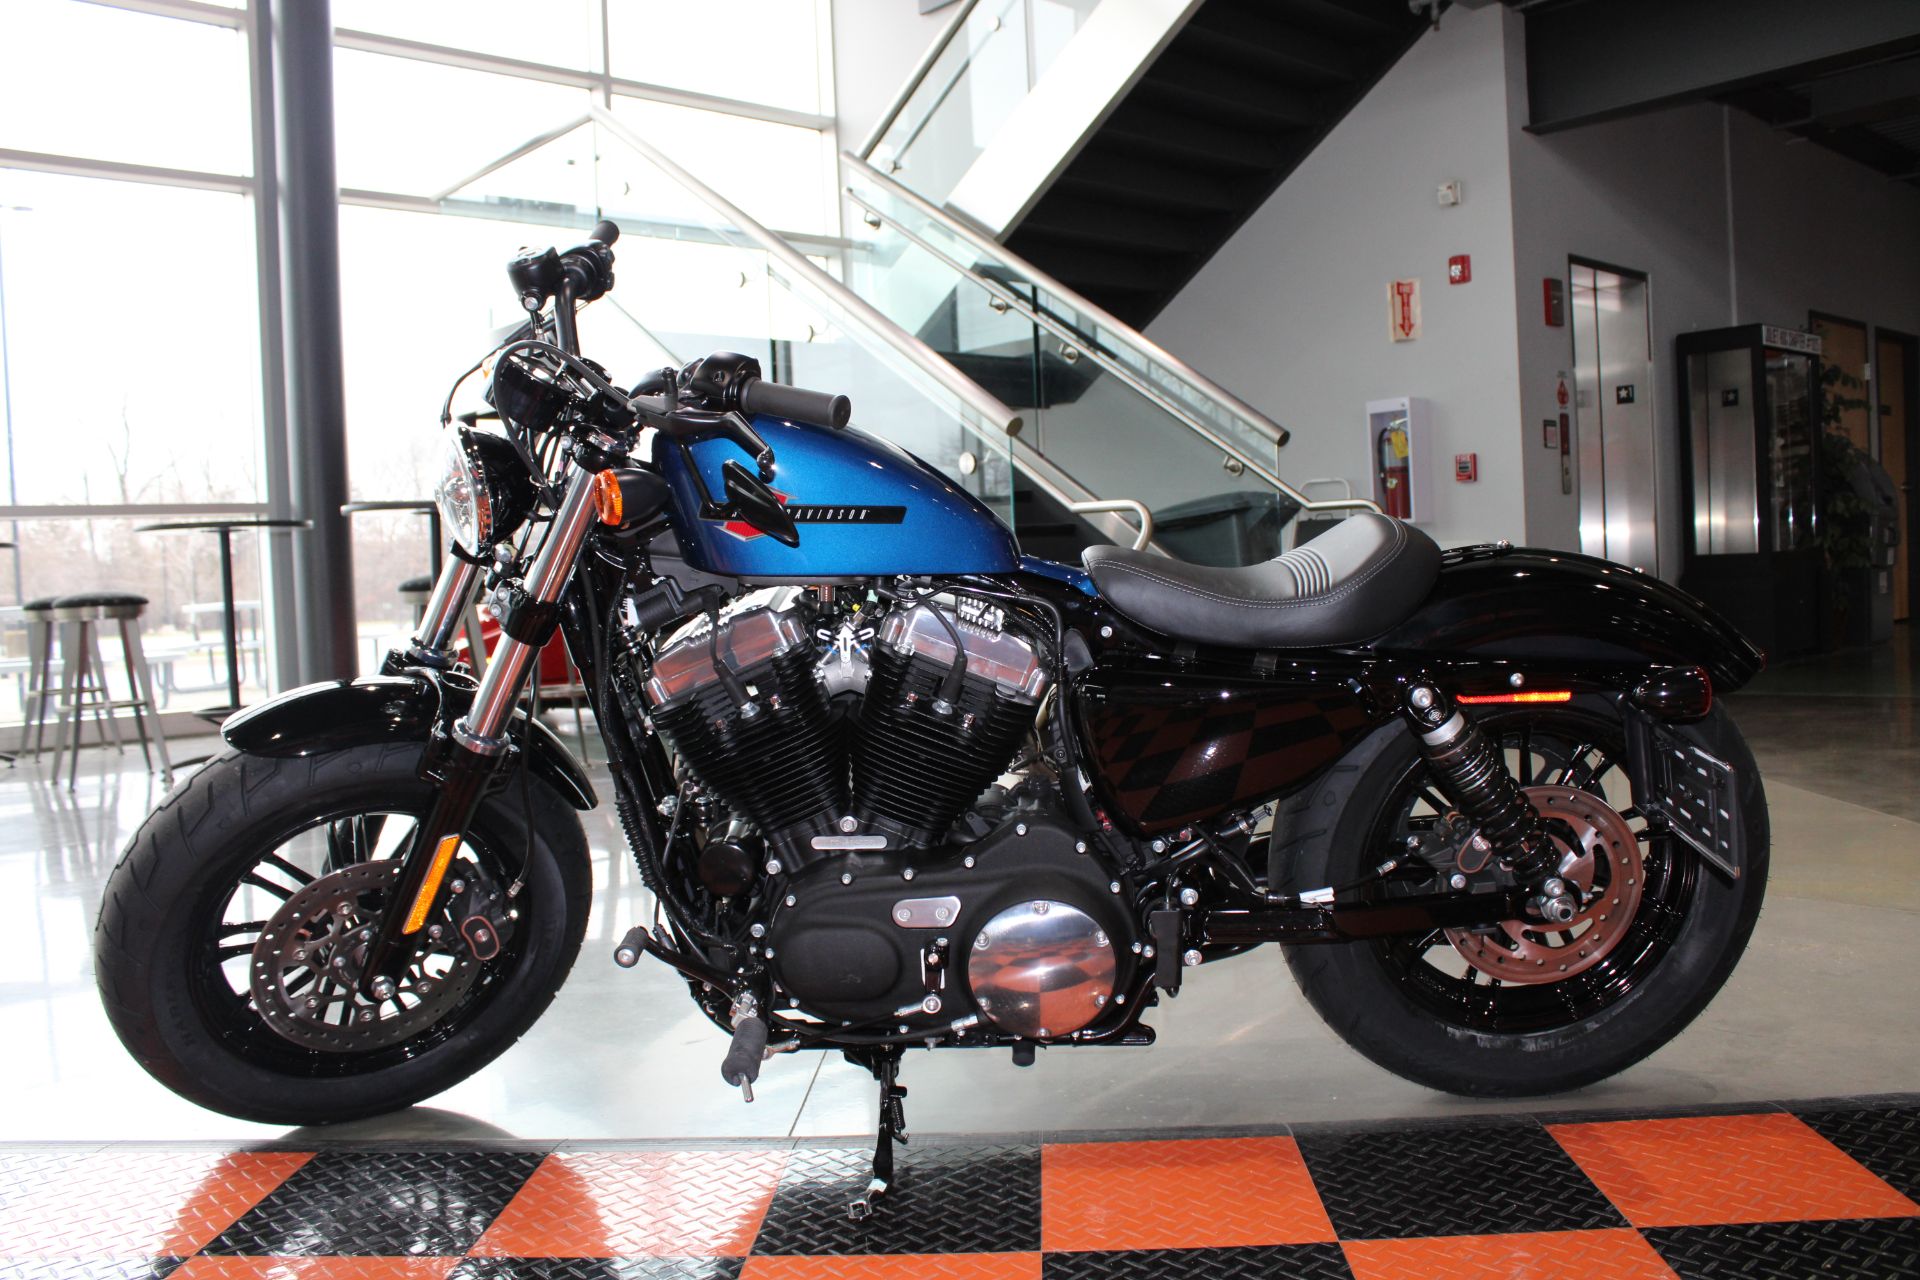 2022 Harley-Davidson Forty-Eight® in Shorewood, Illinois - Photo 15